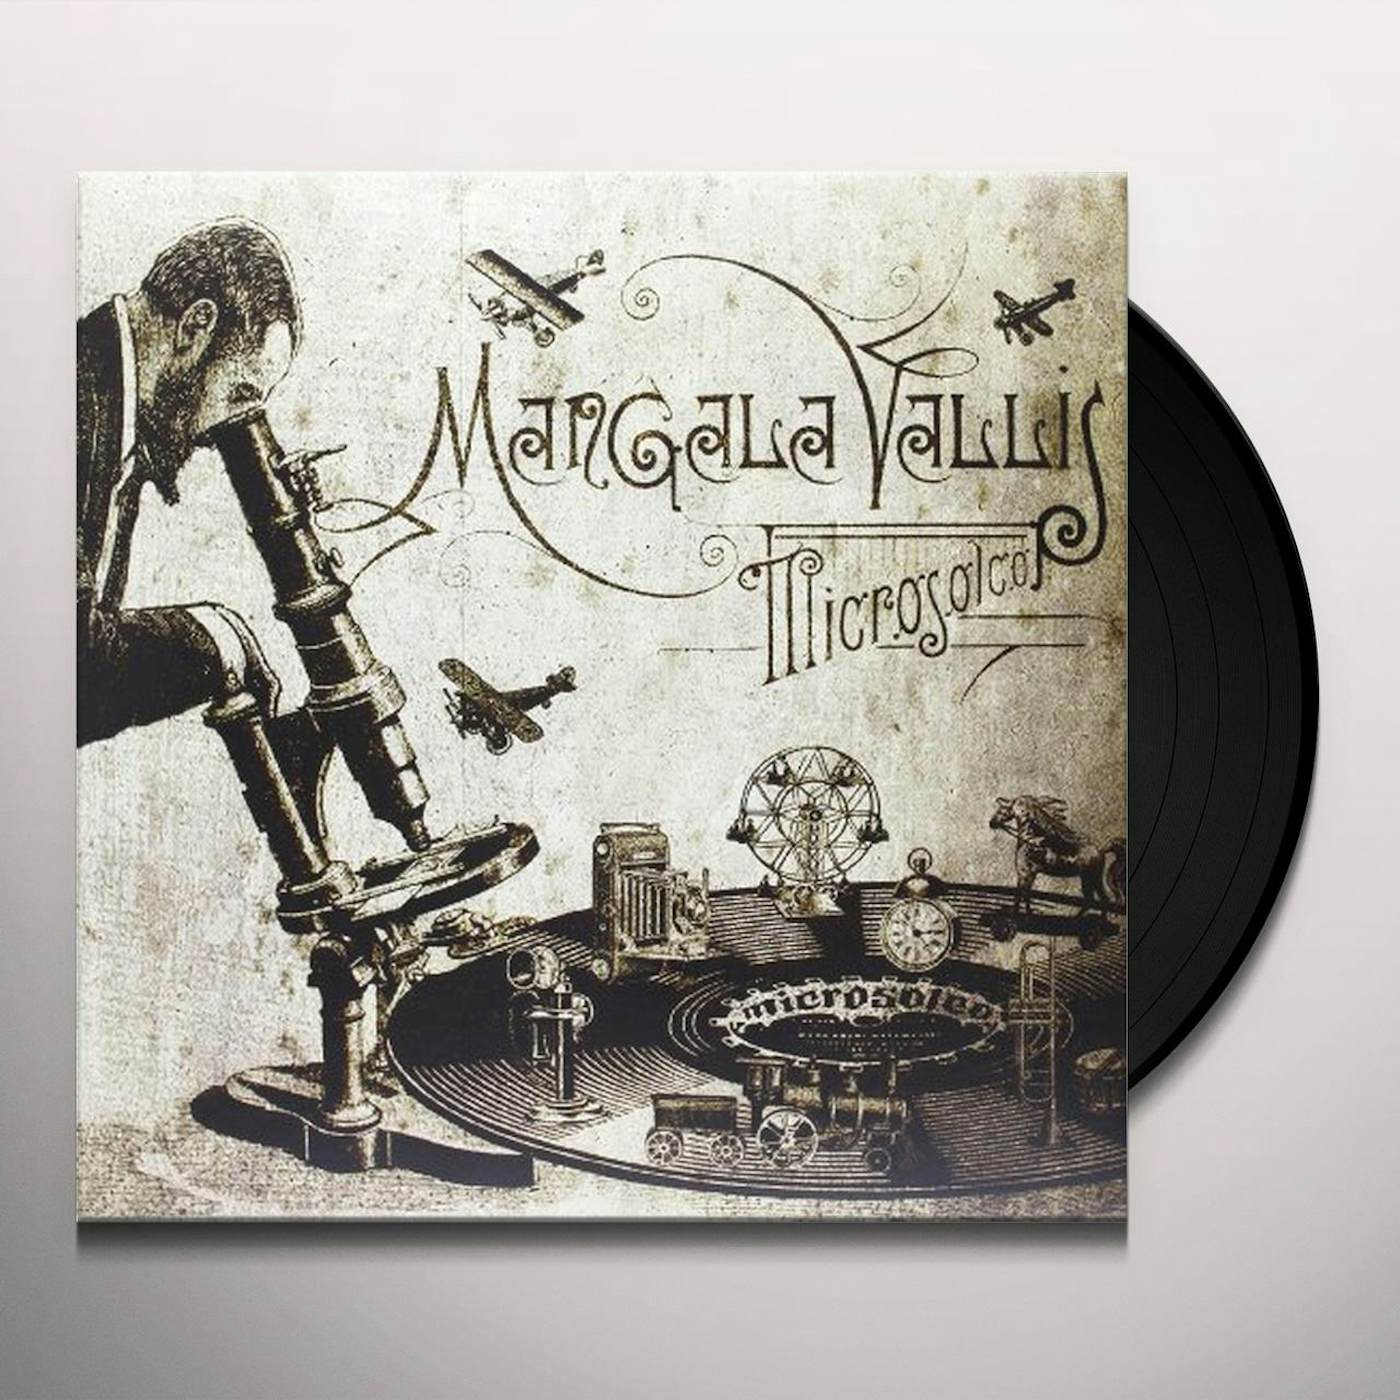 Mangala Vallis Microsolco Vinyl Record